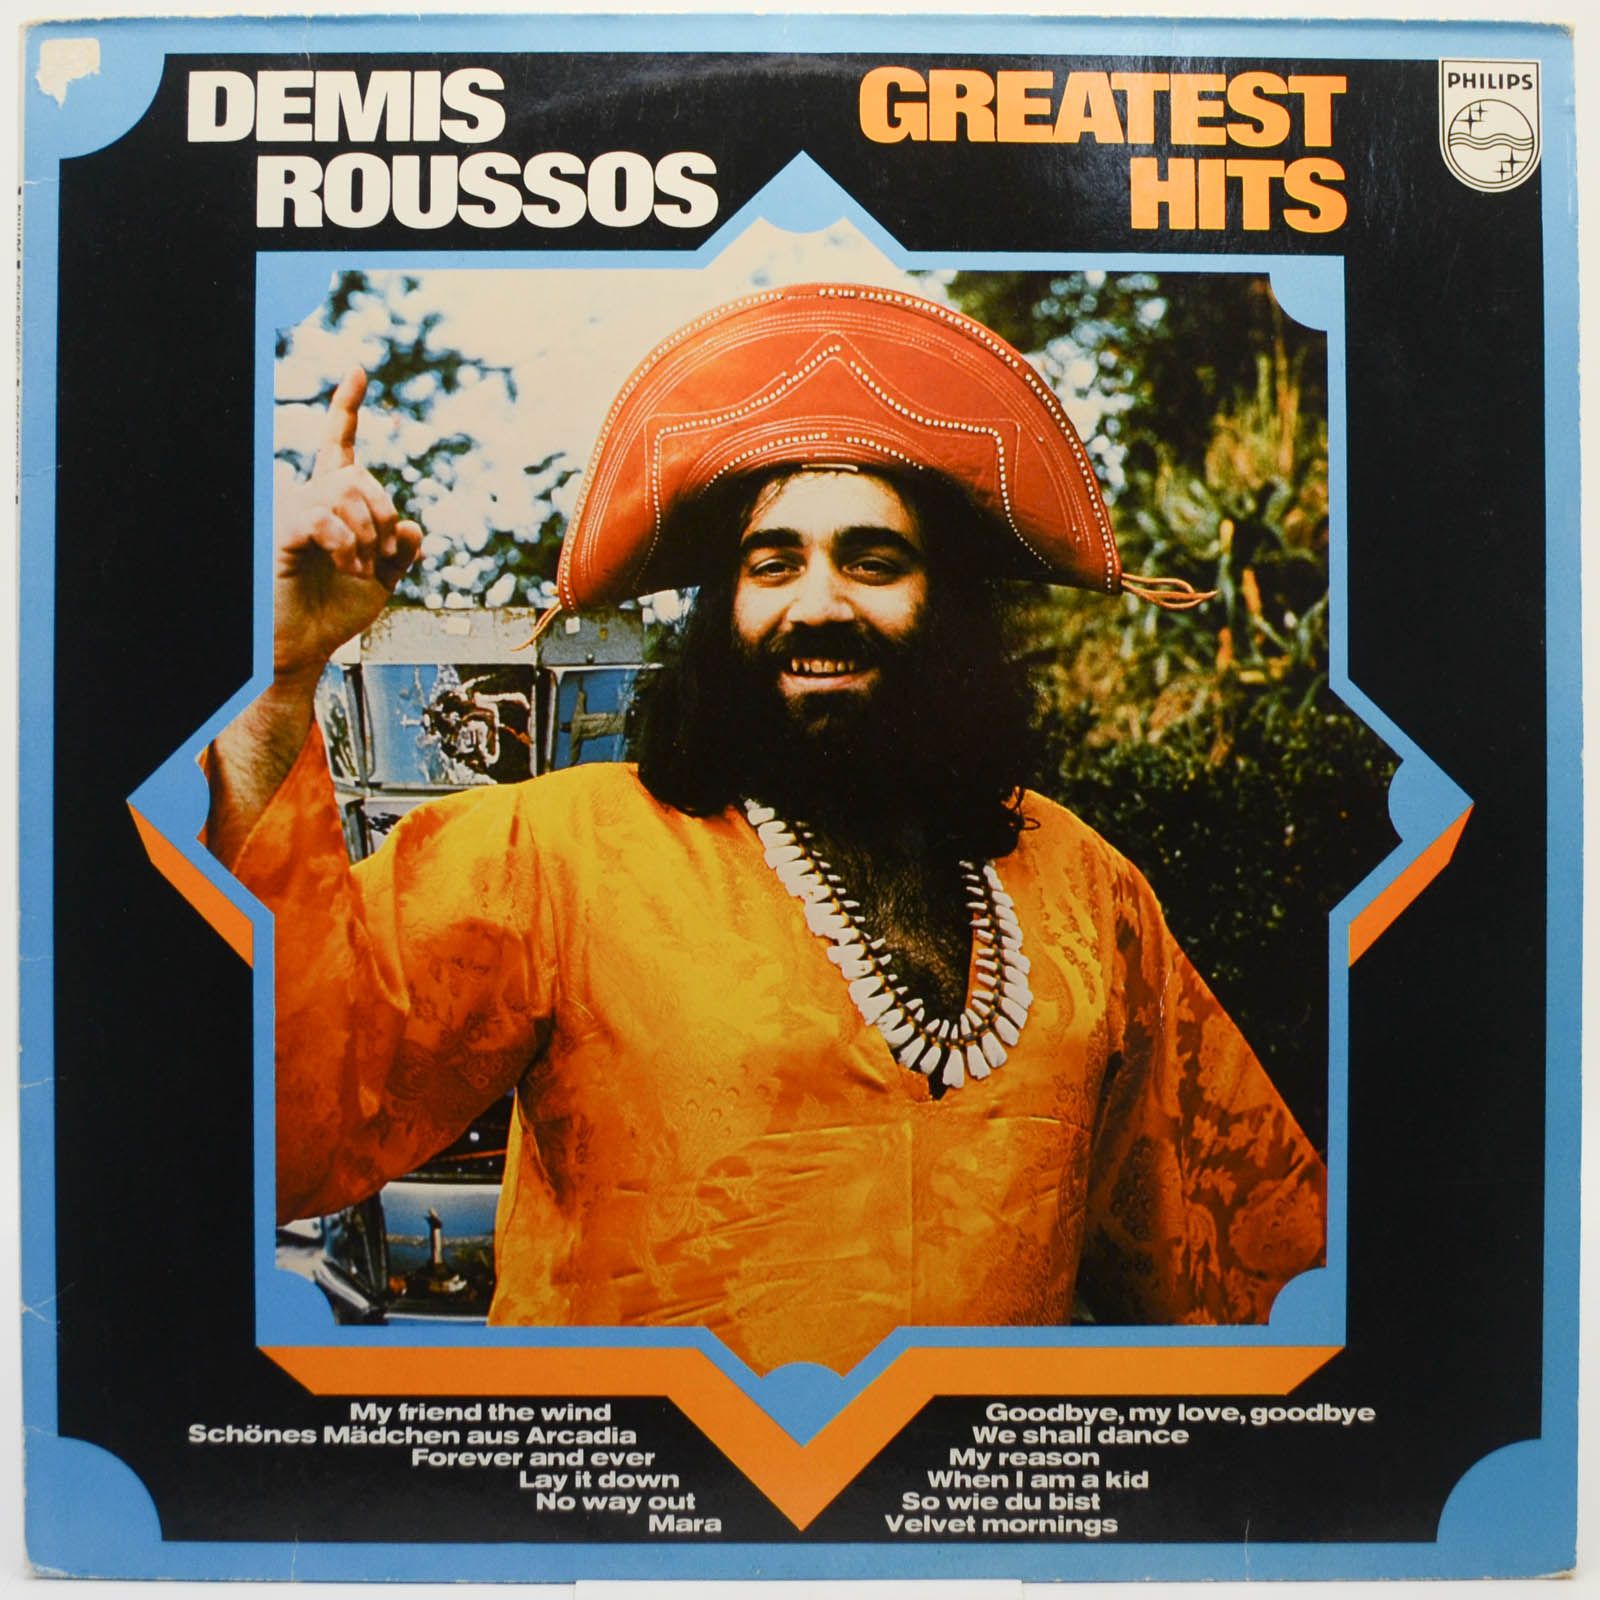 Demis Roussos — Greatest Hits, 1973